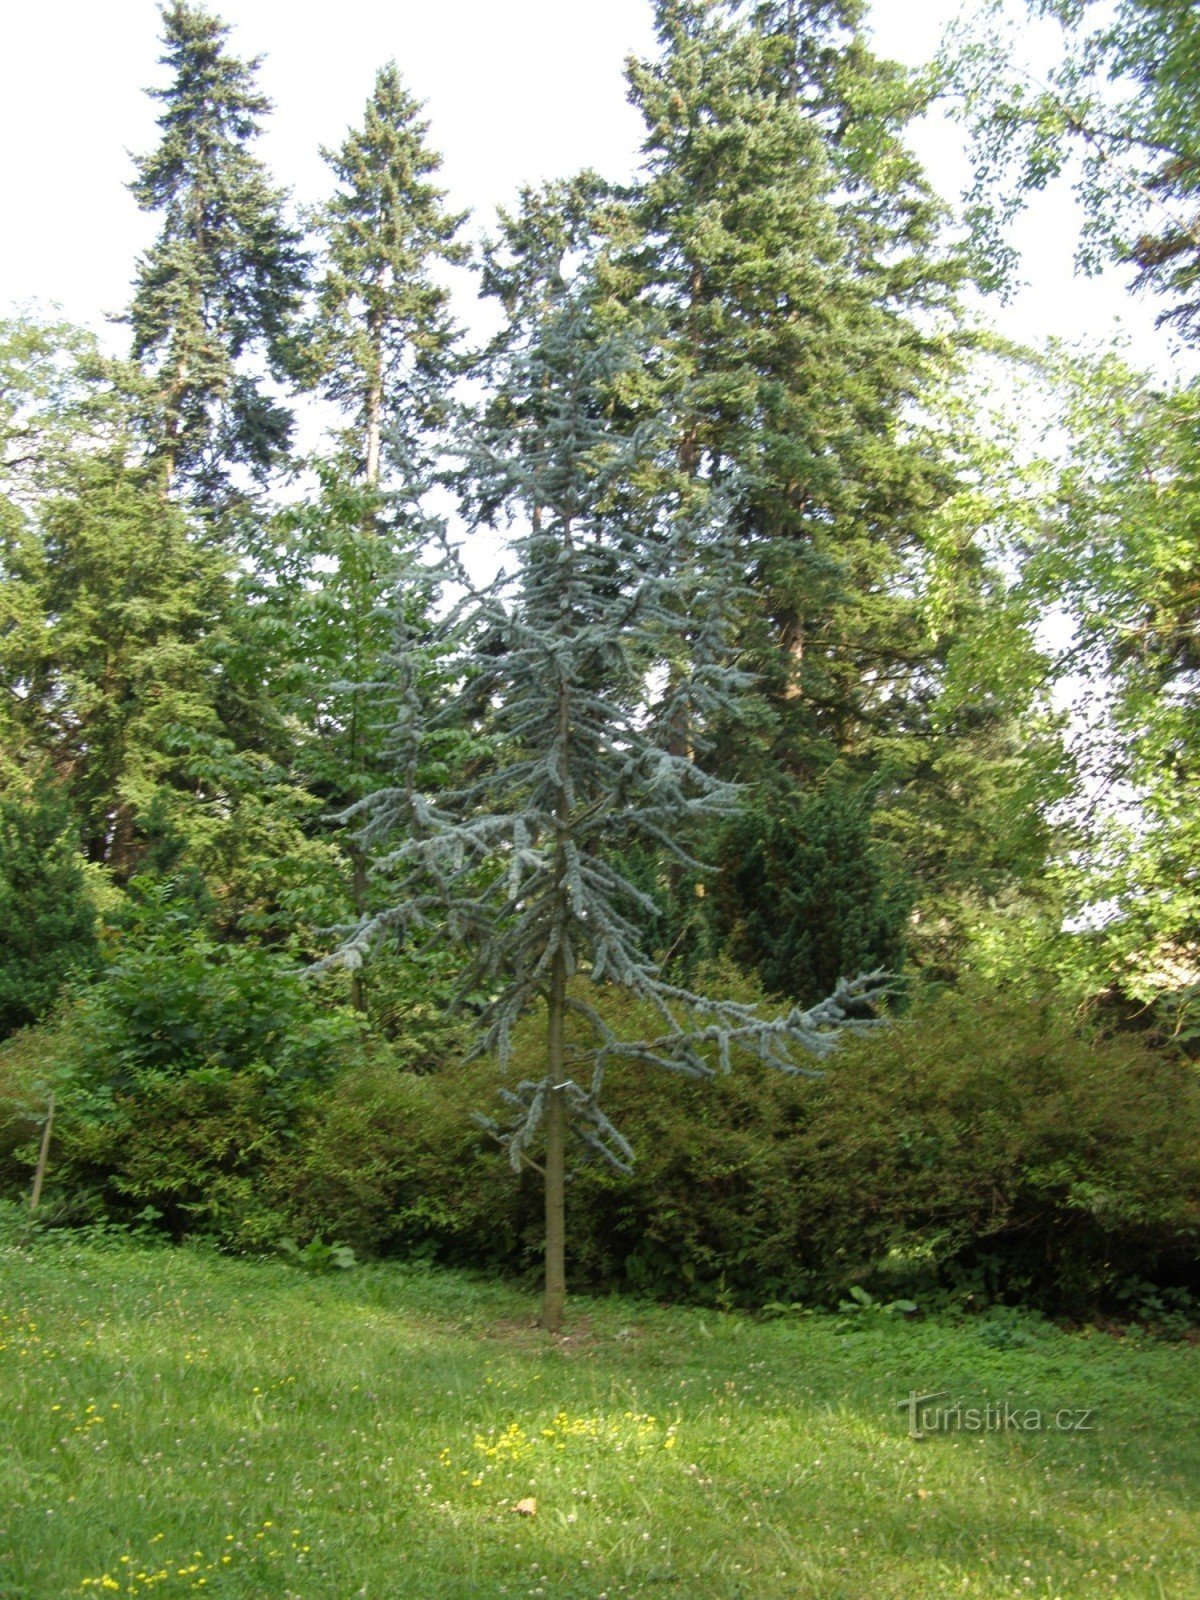 Arboretum Nový Dvůr nær Opava